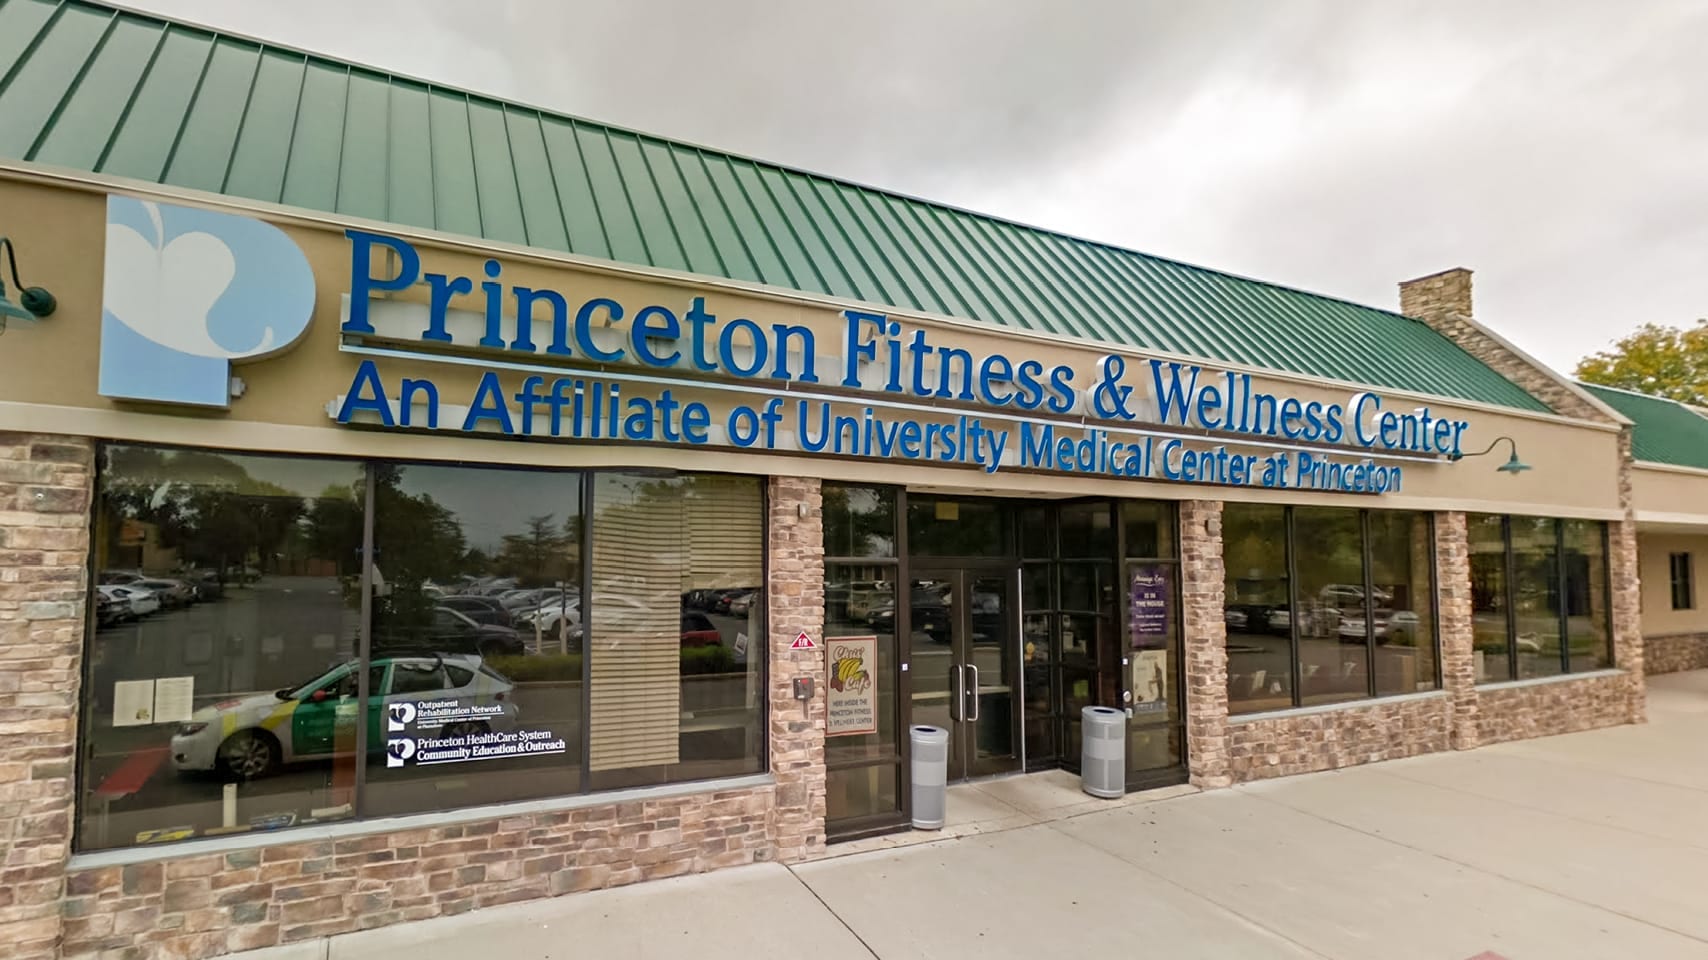 Princeton Center - Princeton Fitness & Wellness